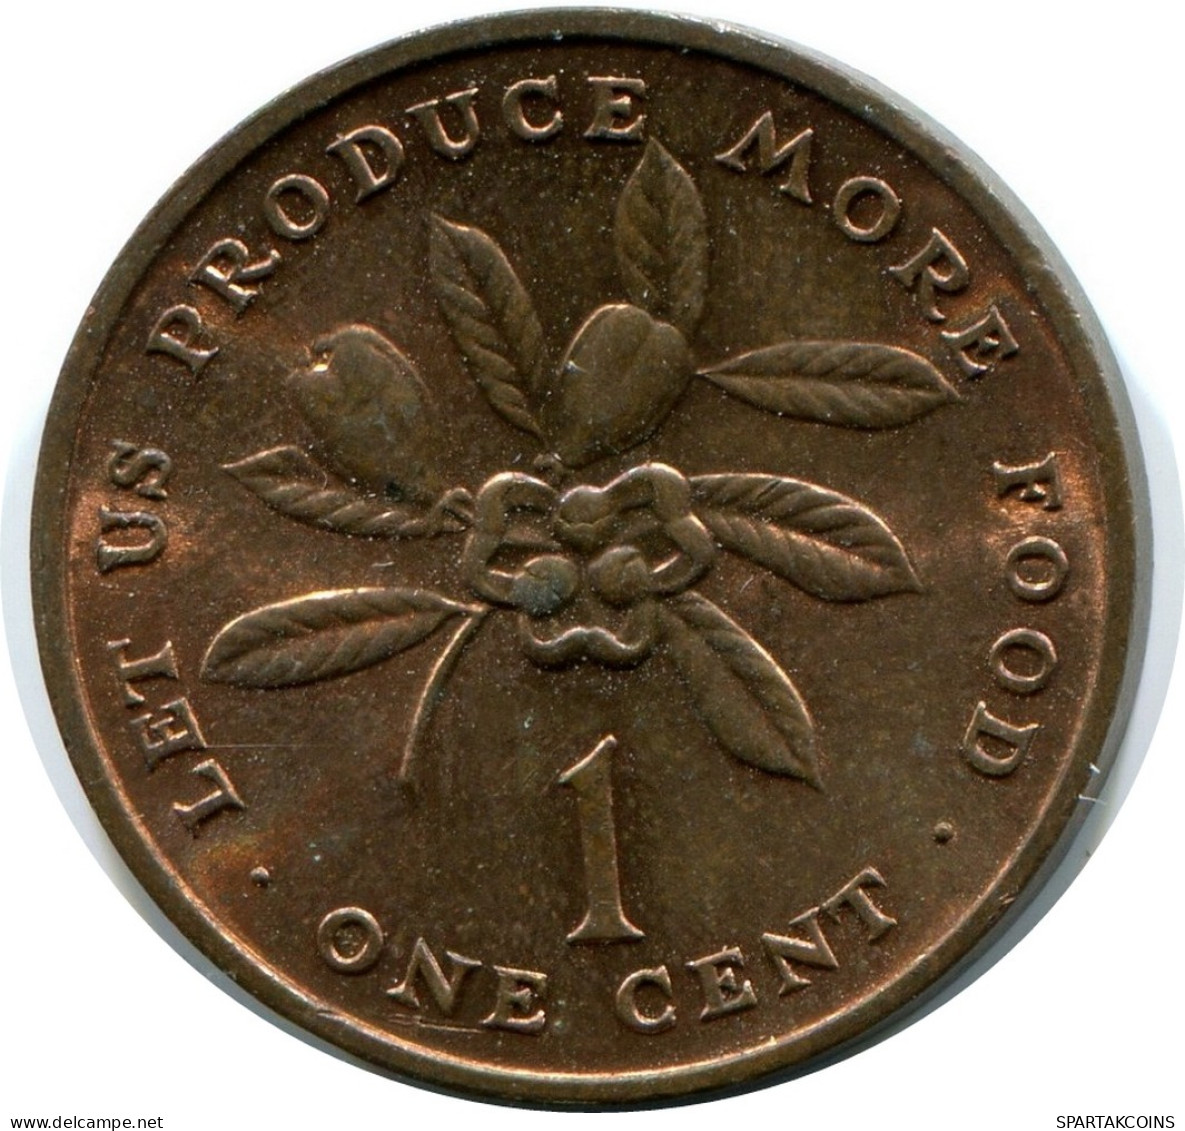 1 CENT 1973 JAMAICA Coin #AX924.U - Jamaica